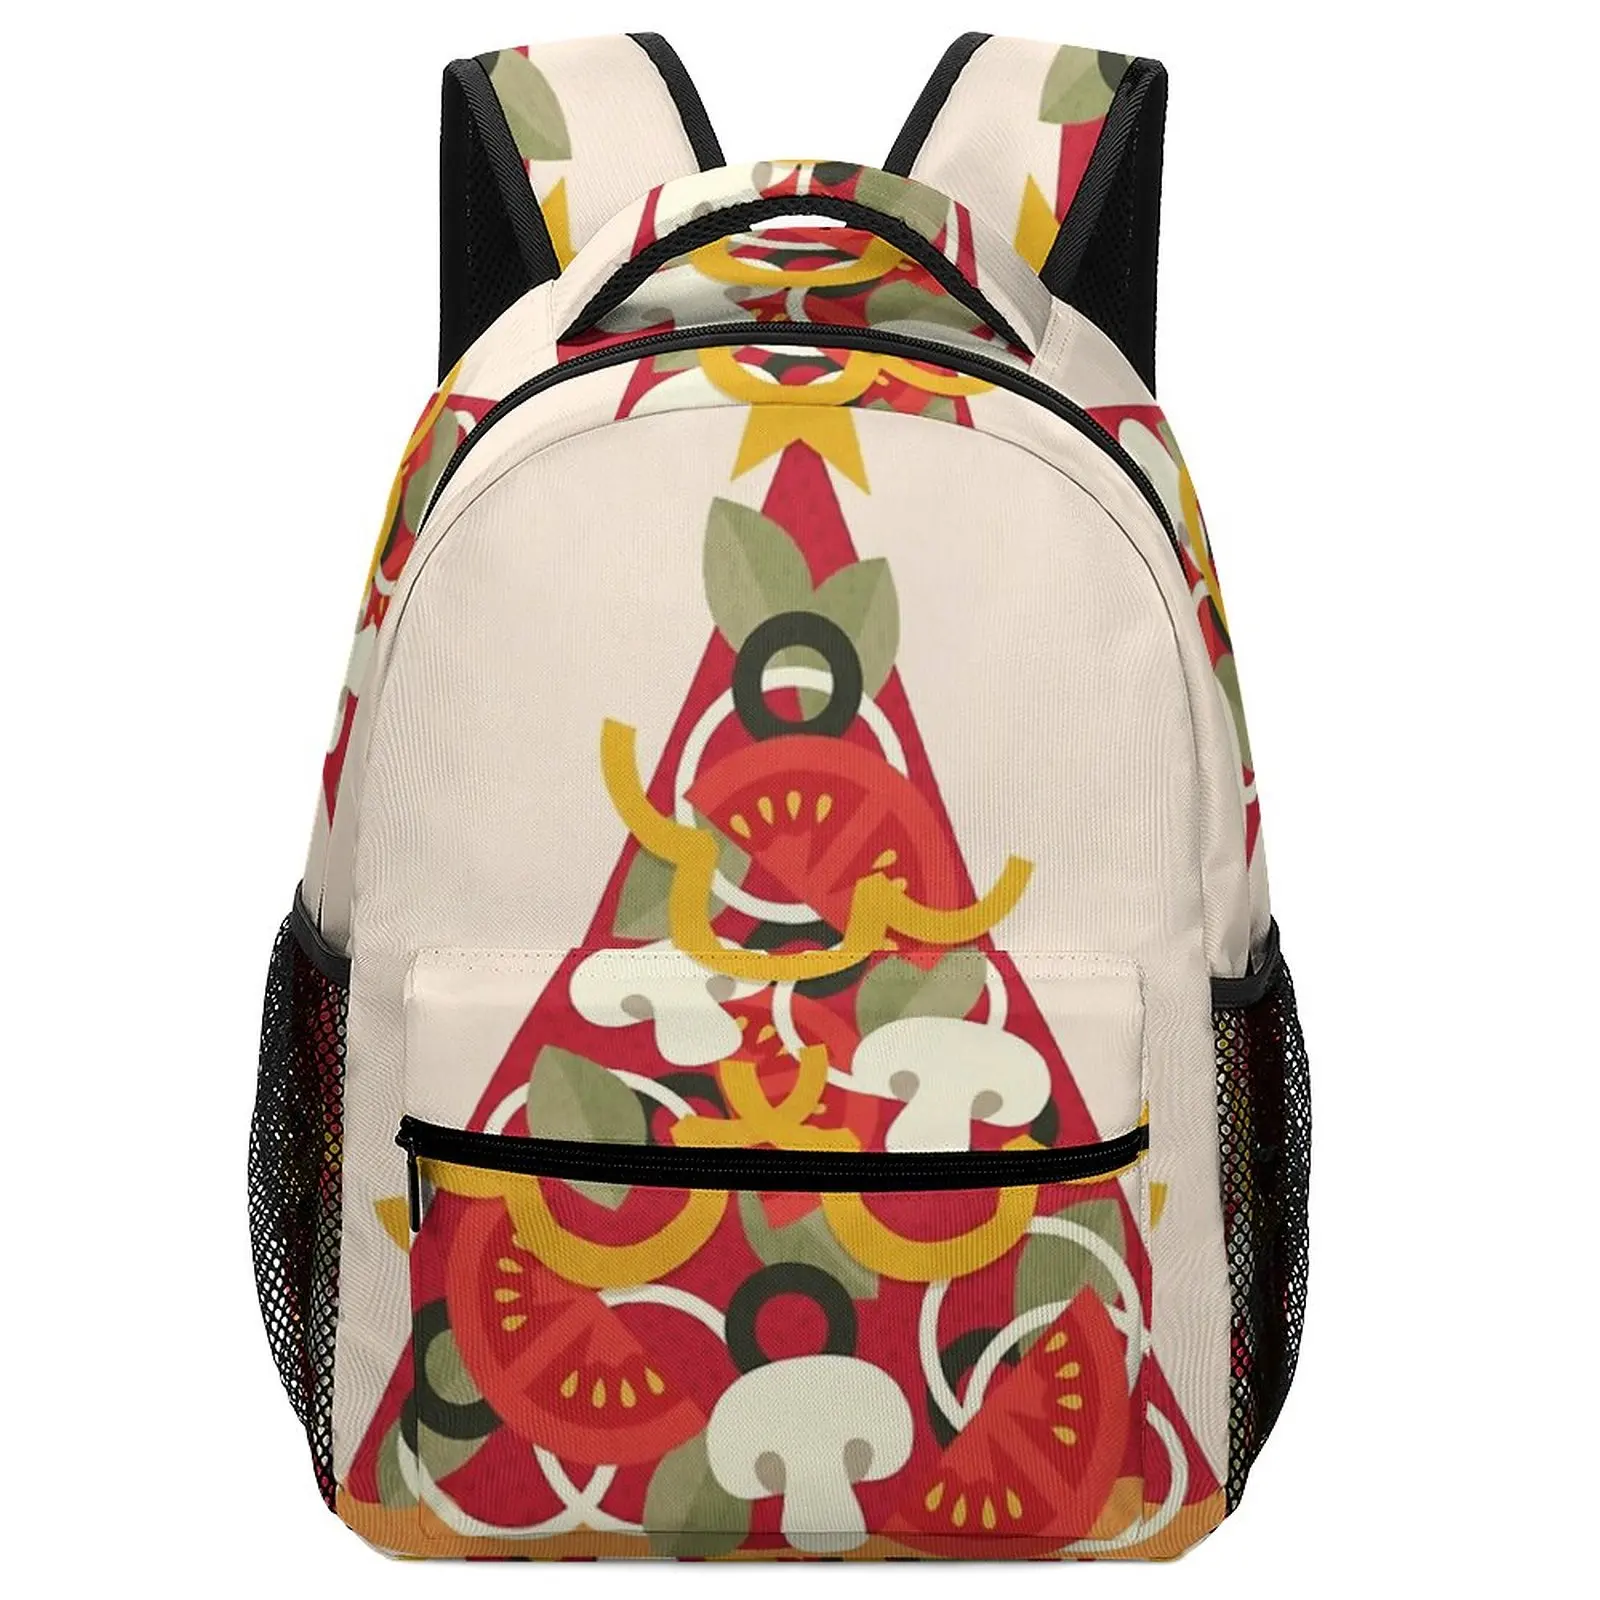 New Pizza on Earth - Vegetarian Art Kawai School Supplies for Girls Boys School Bag for Teenagers Schoolbag Accessories